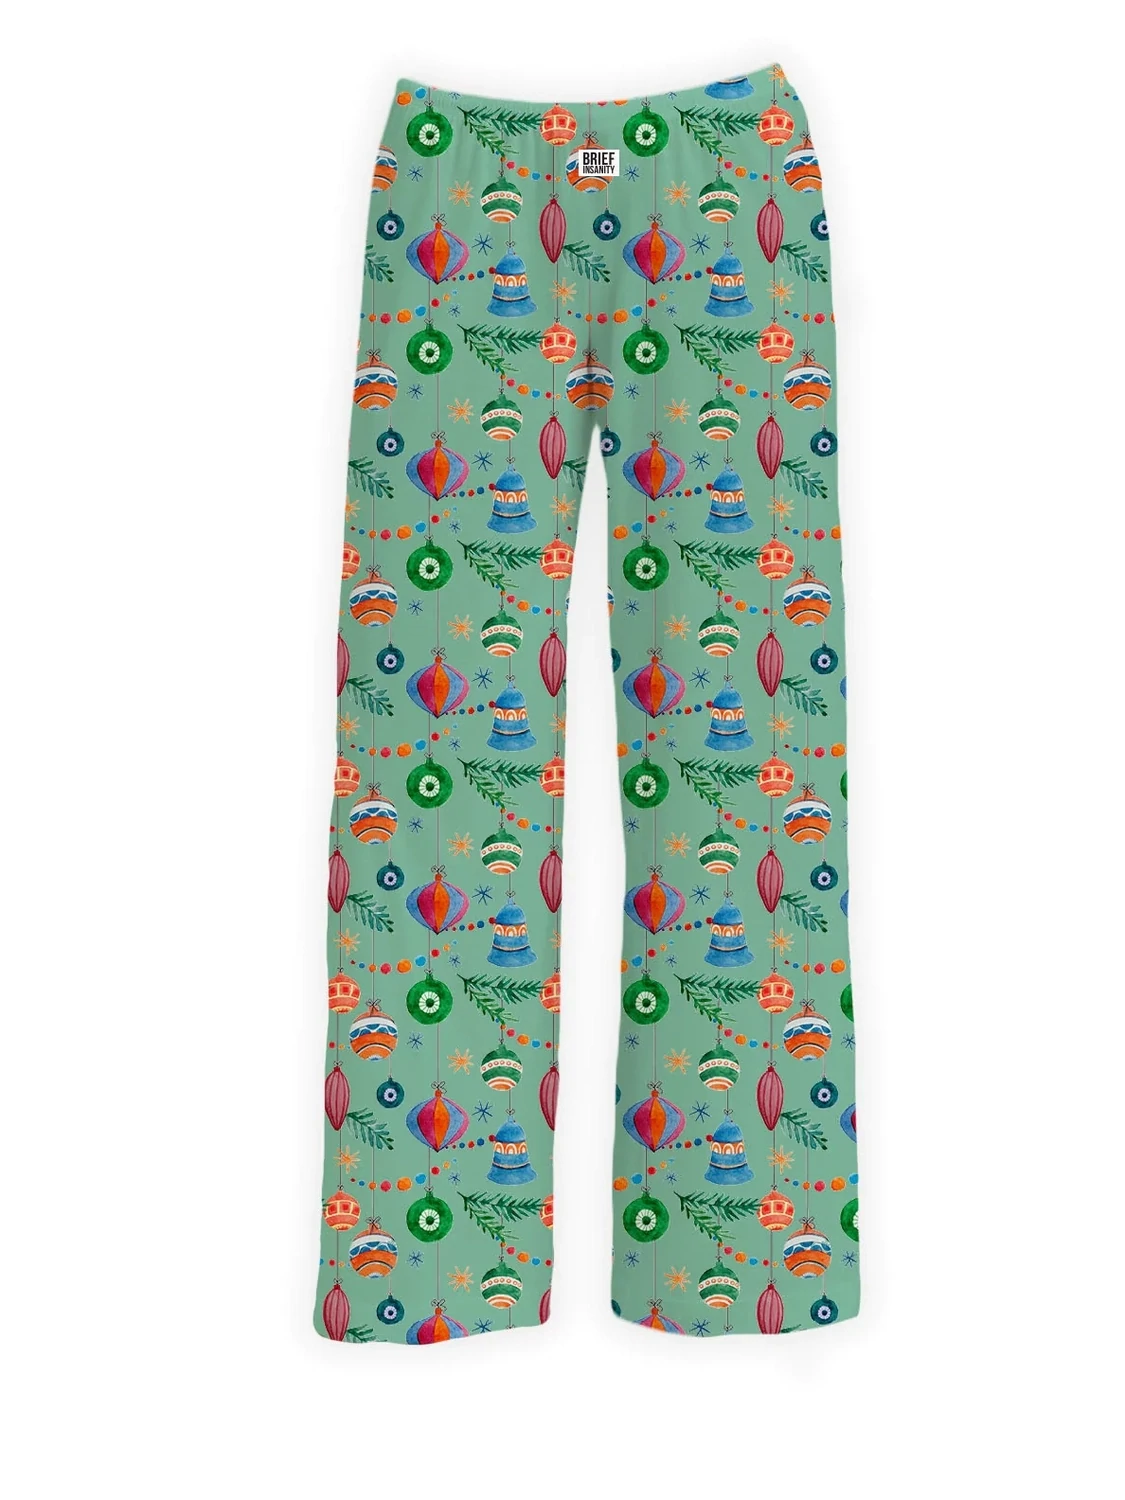 Brief Insanity Pajama Pants - Christmas Ornaments